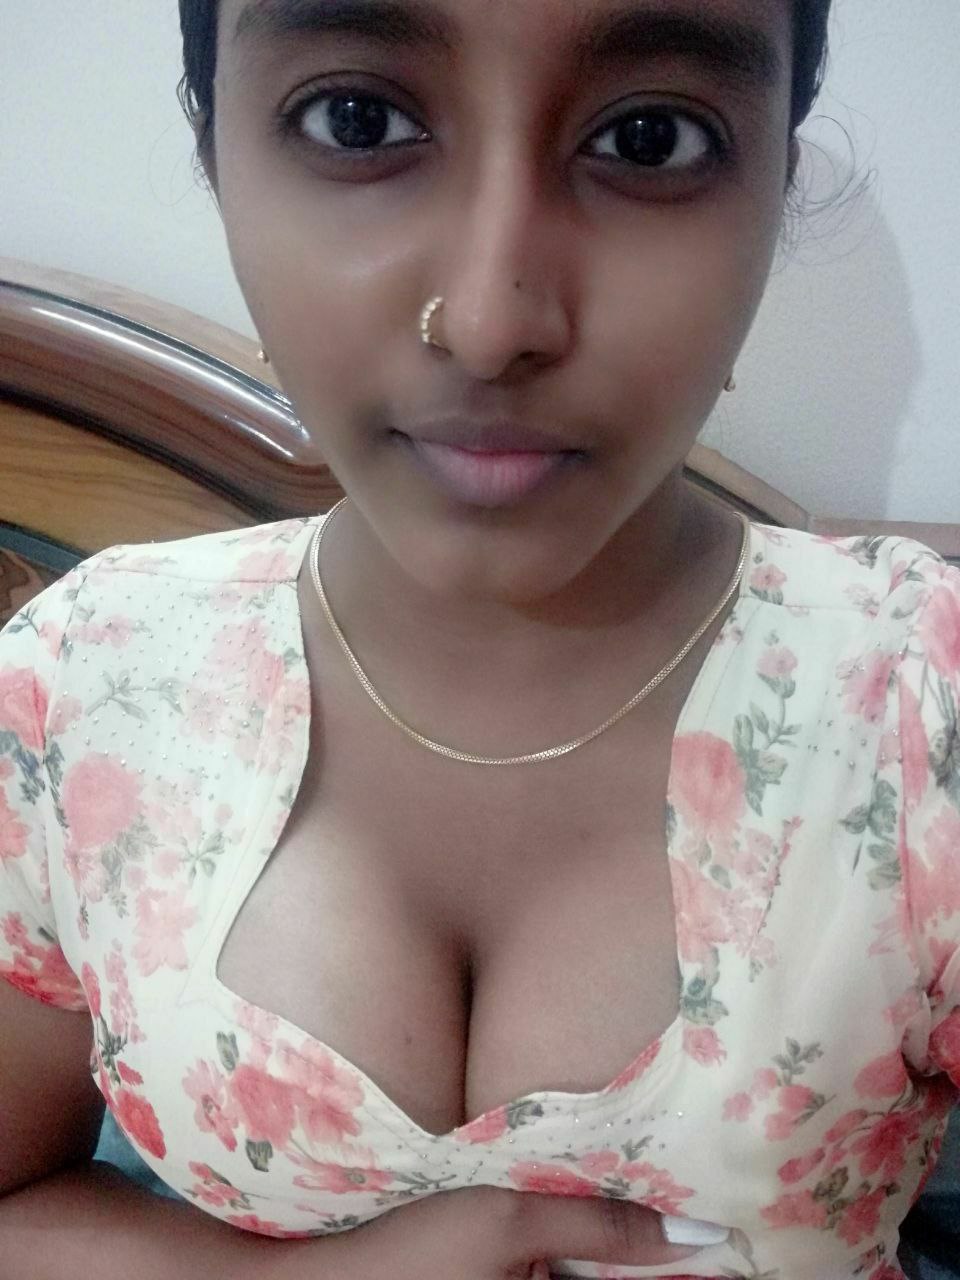 Kerala teen girl part 1